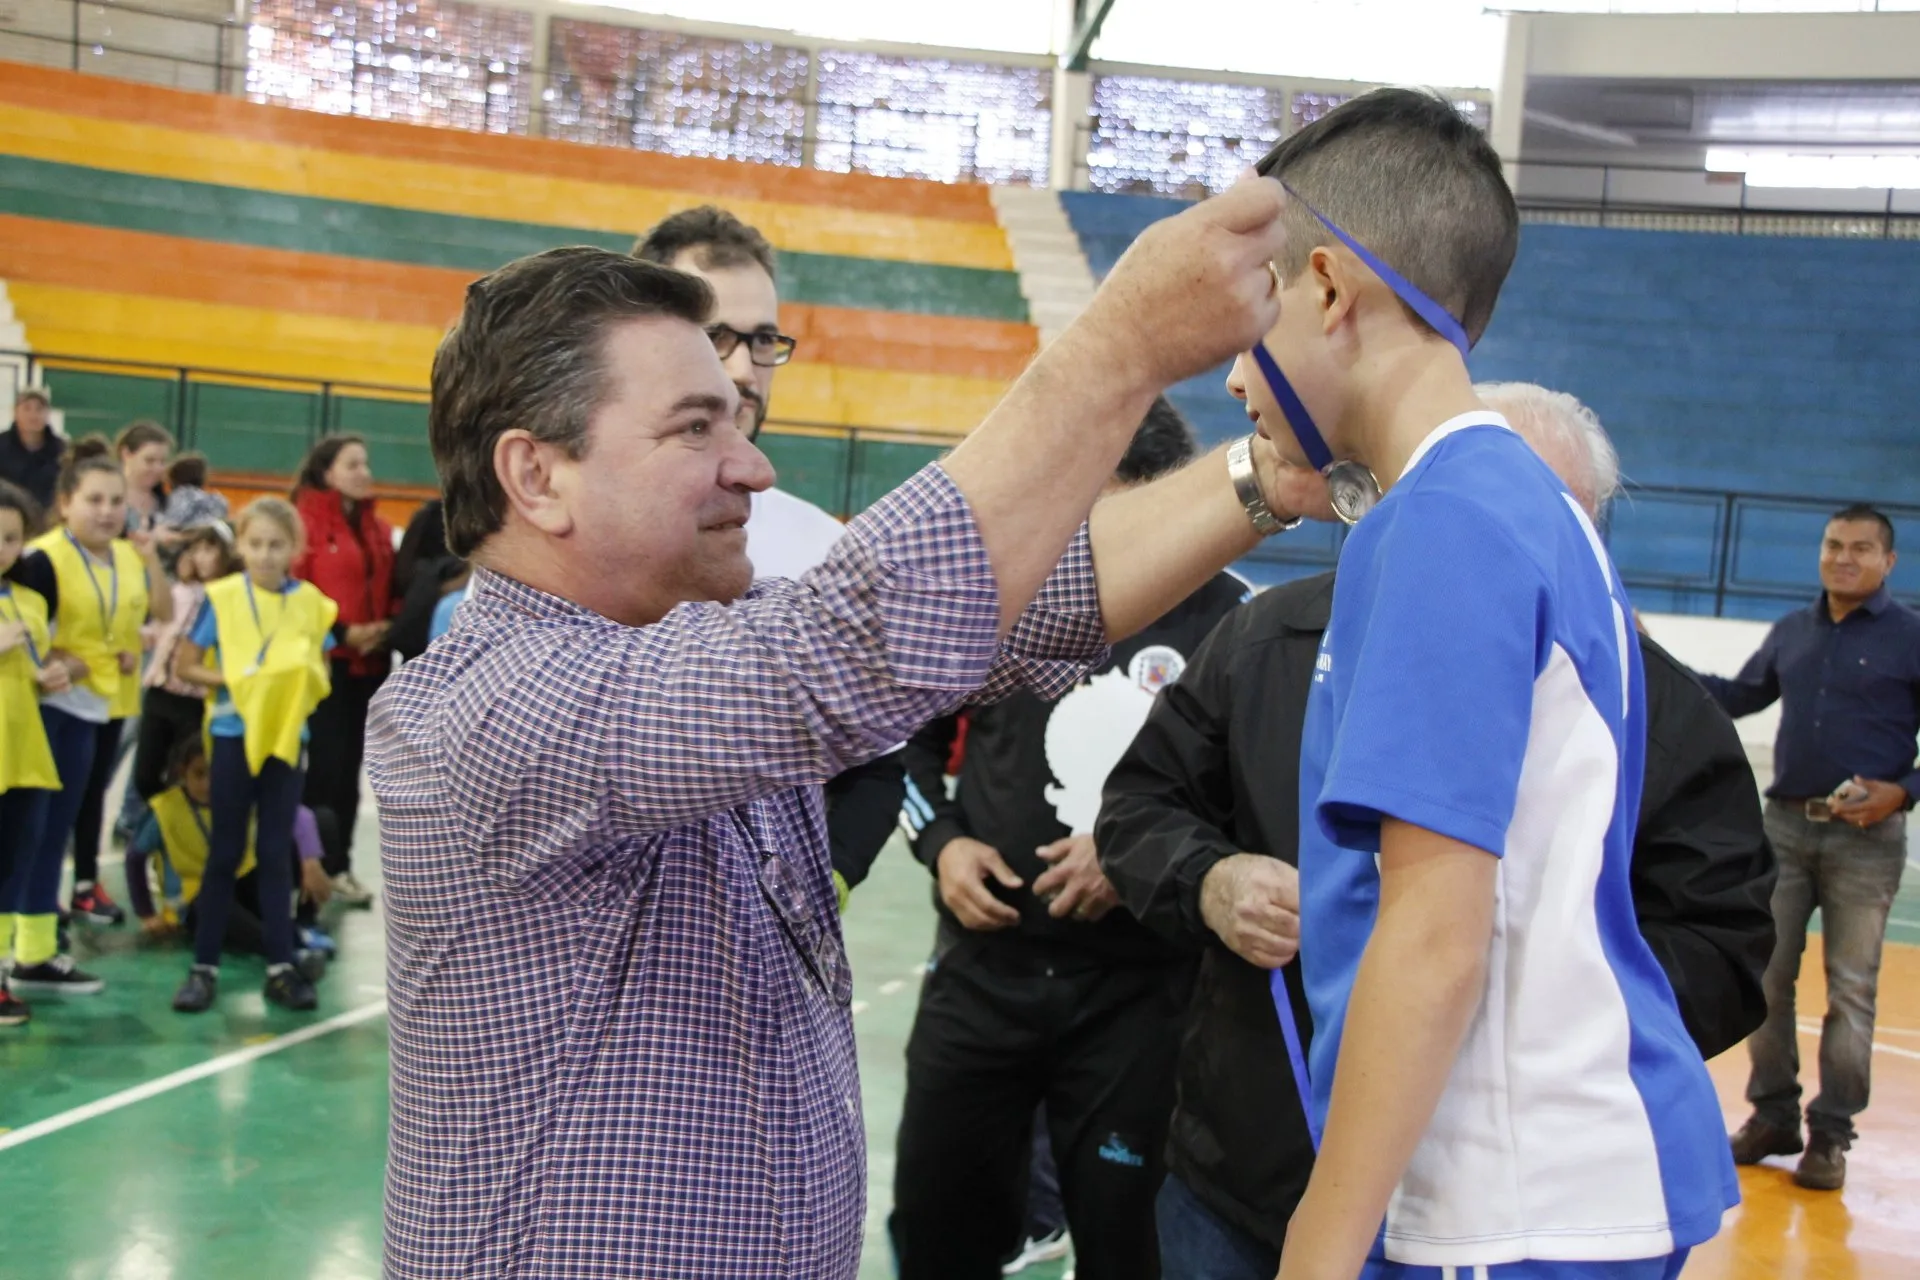 JOEMA premia campeões do Futsal